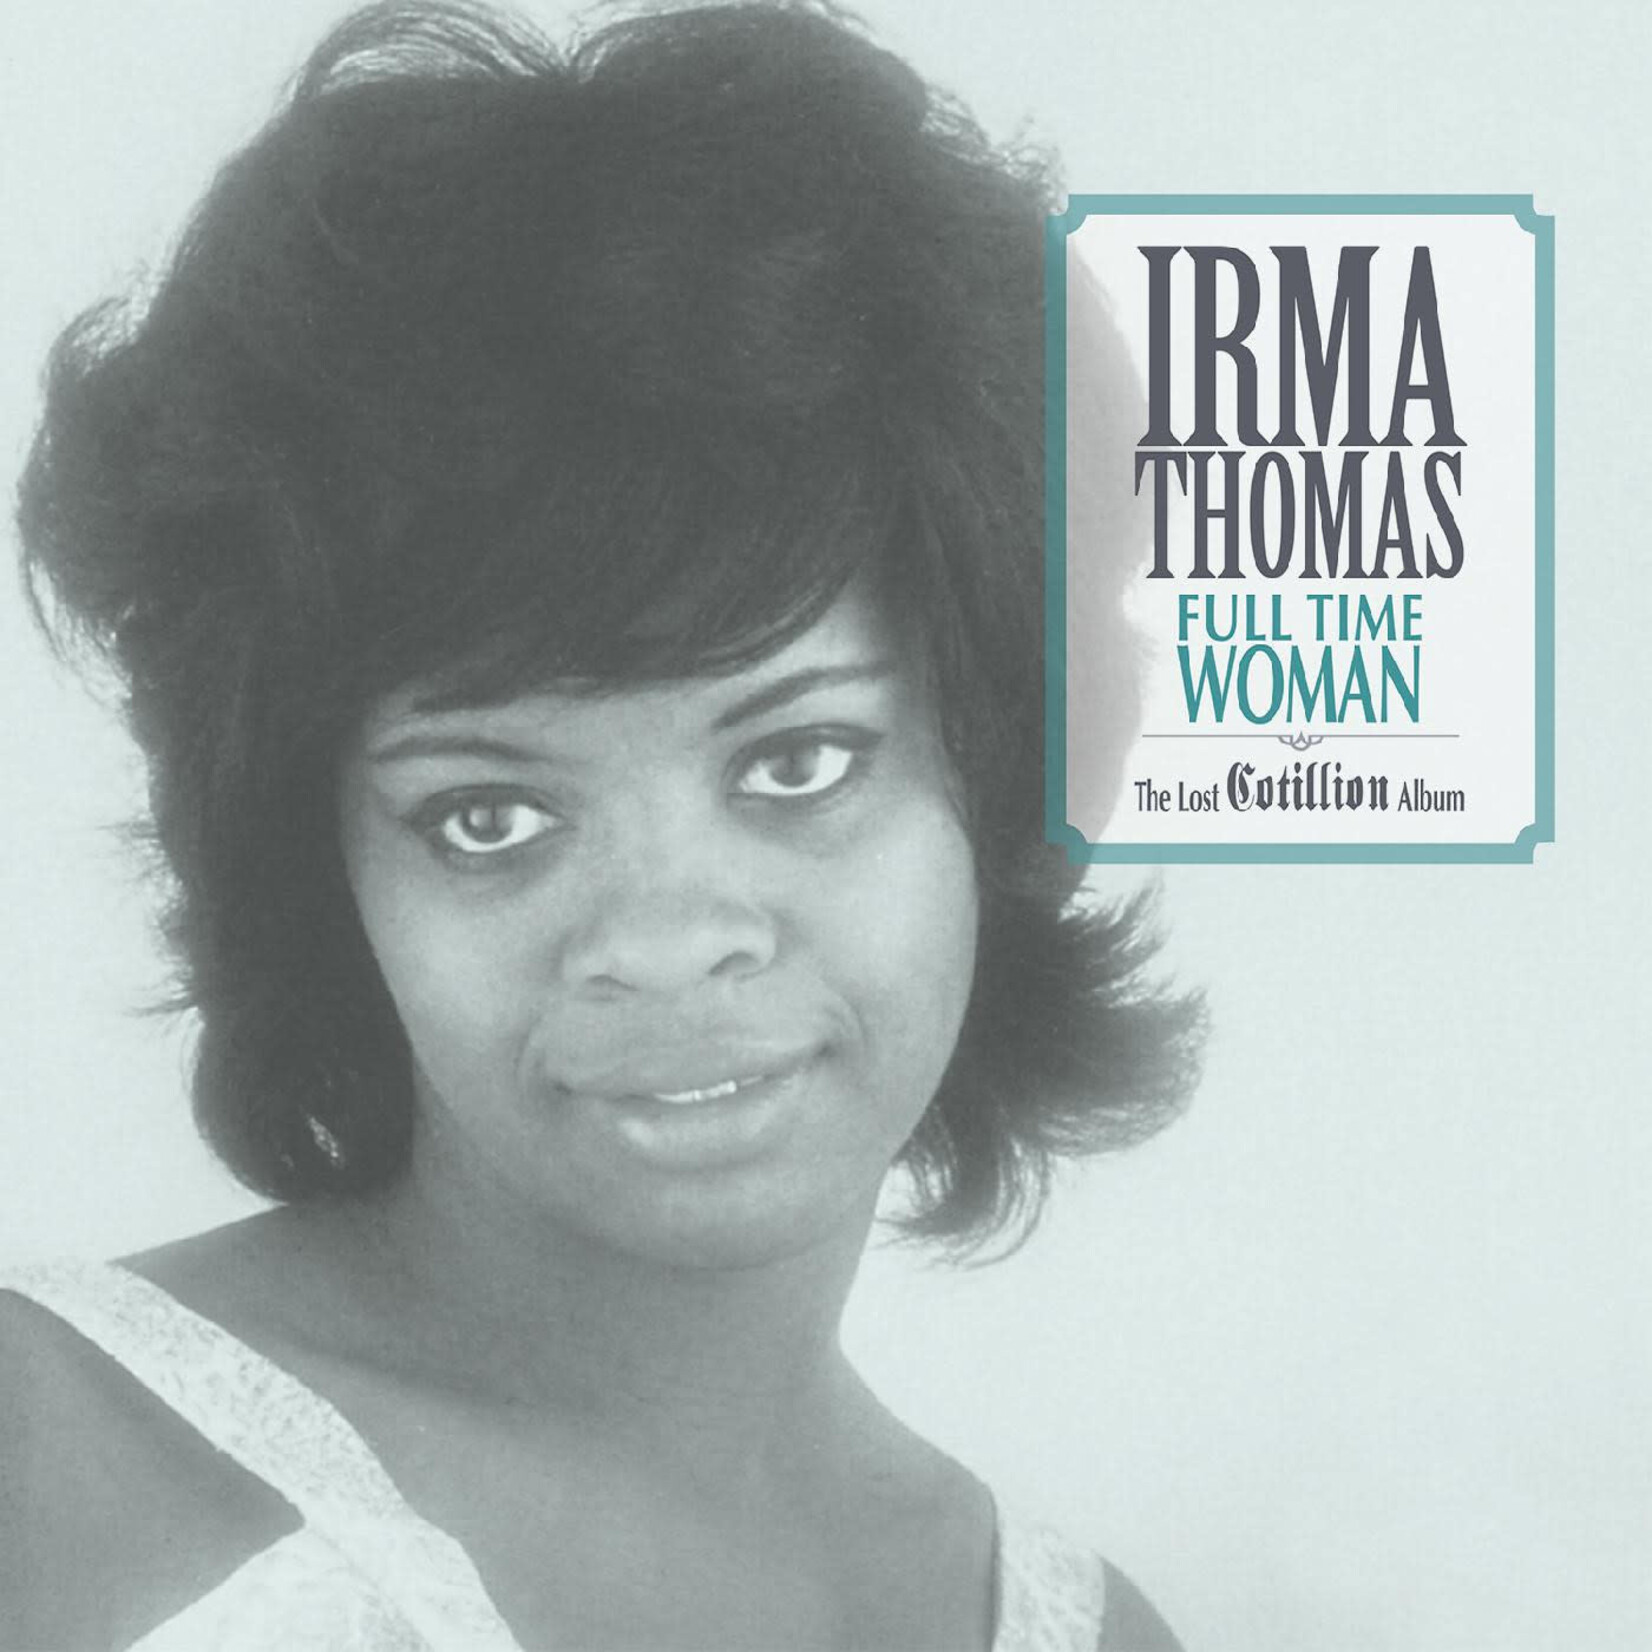 Irma Thomas - Full Time Woman: The Lost Cotillion Album - Vinyl LP (NEW)